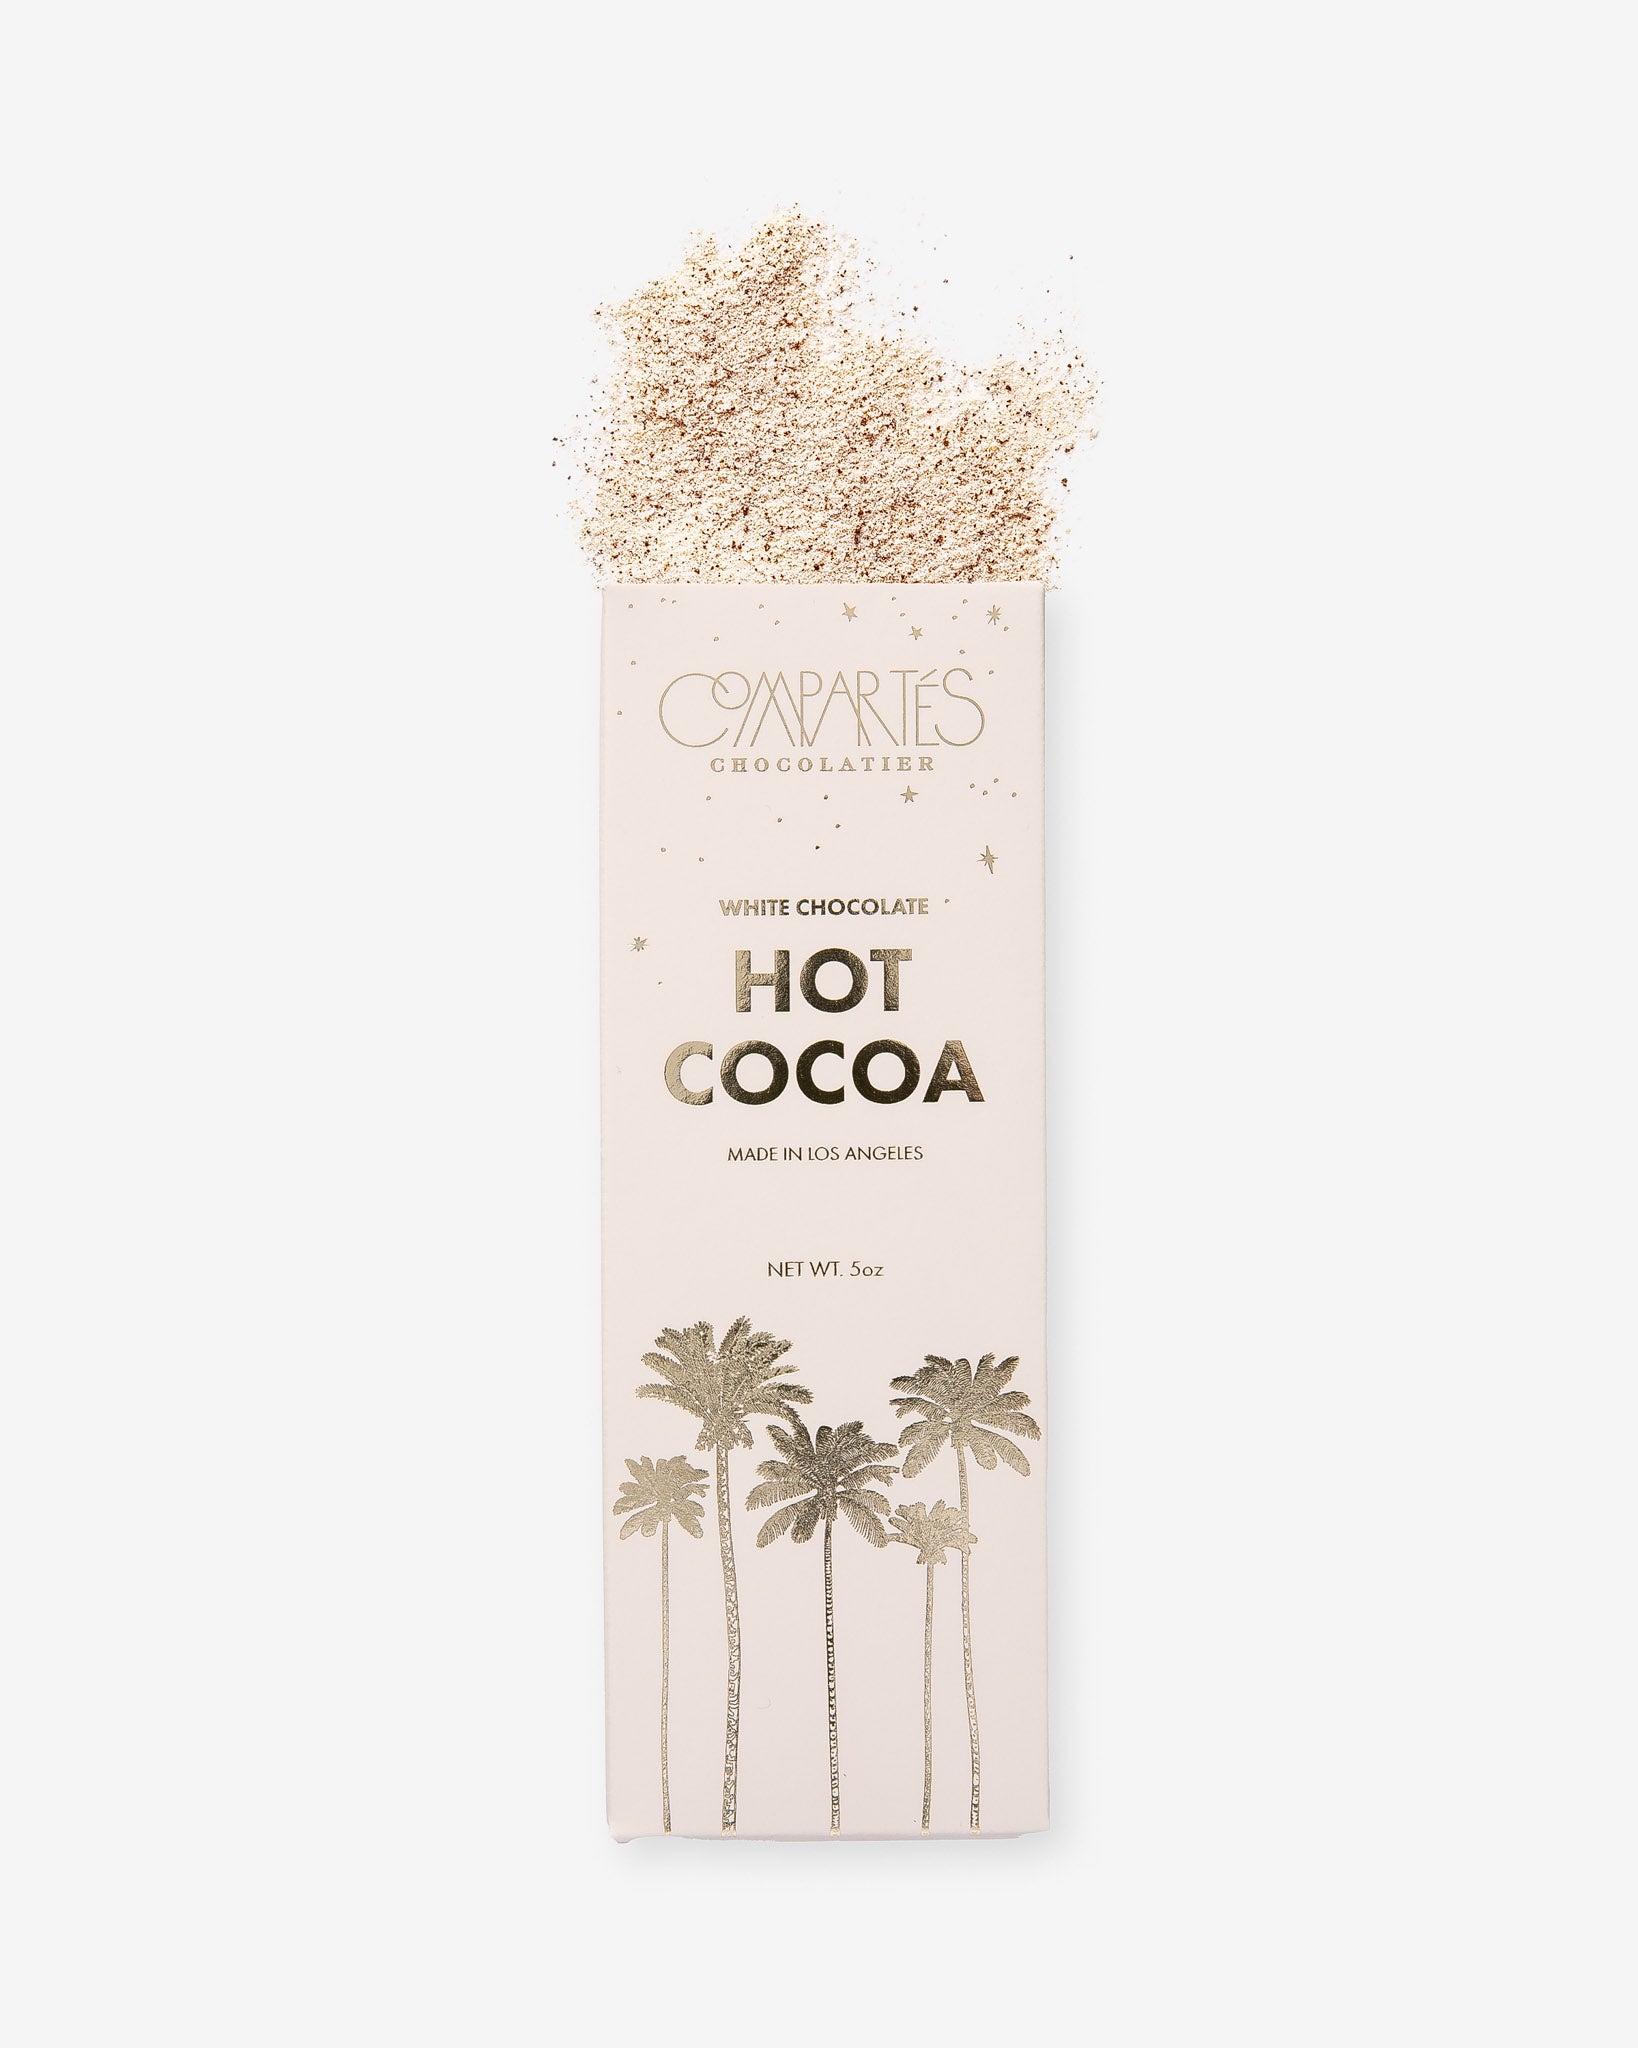 Gourmet Hot Chocolate Gift Box - Luxury White Chocolate Hot Cocoa Mix